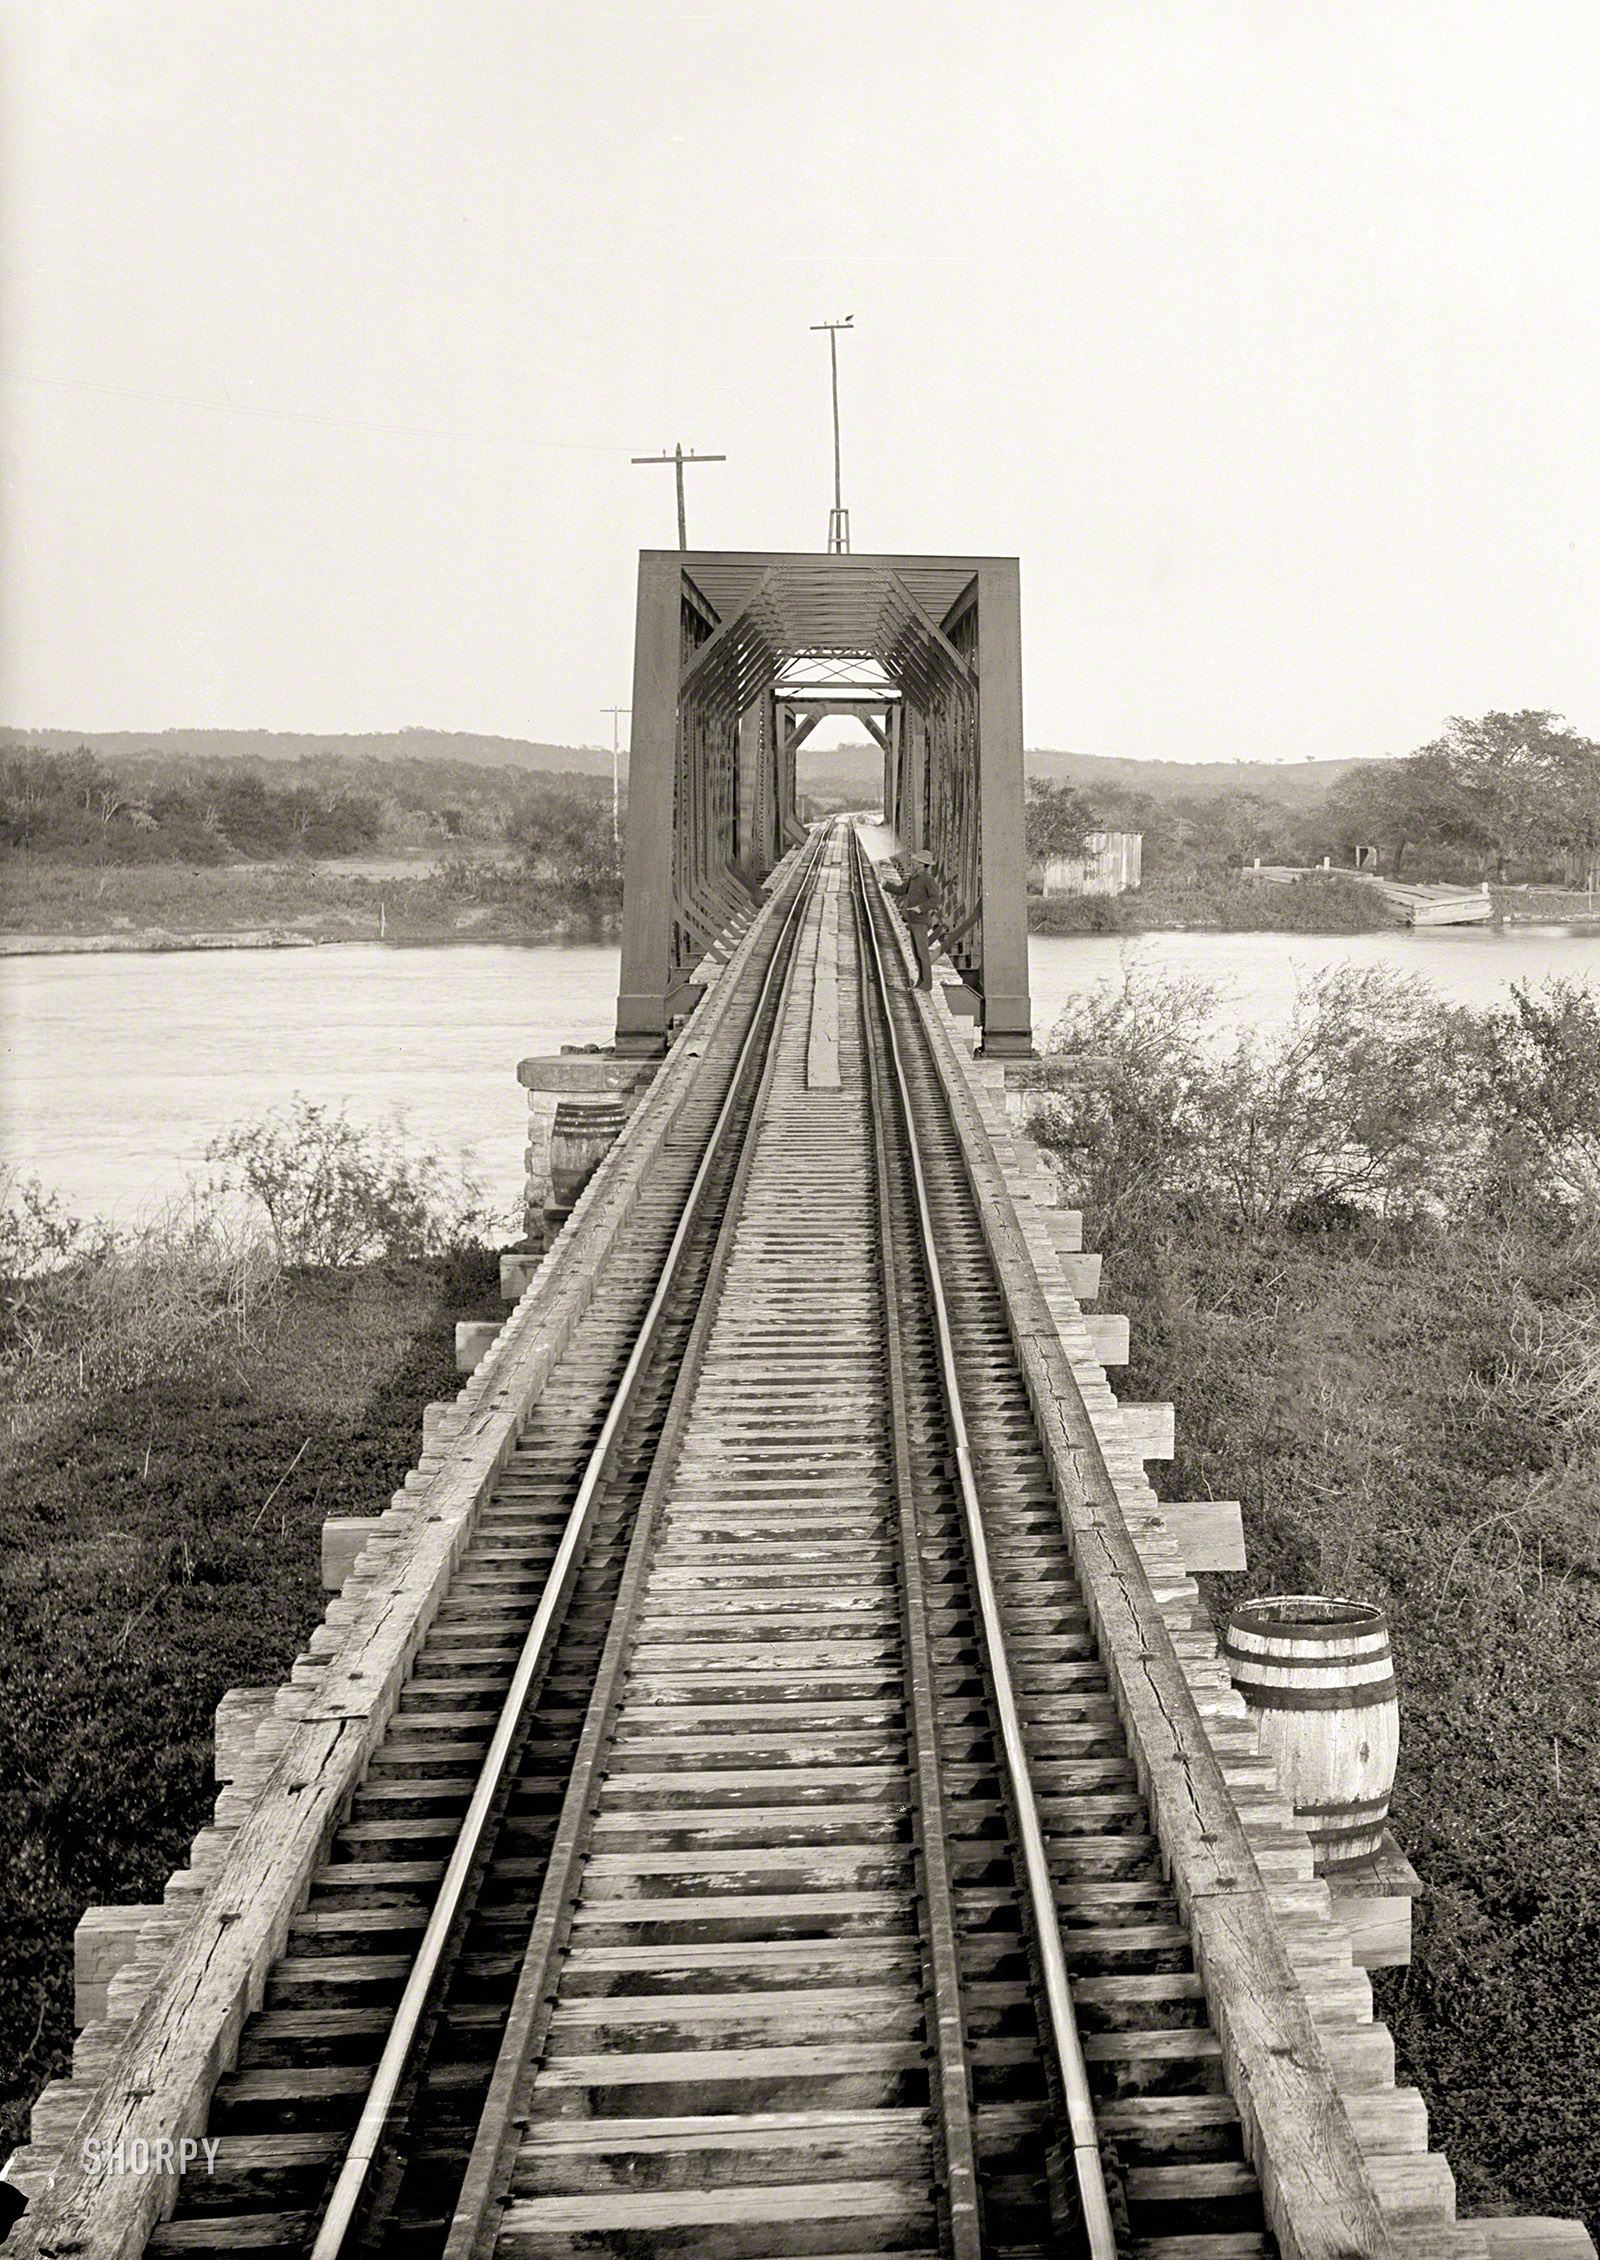 Tamaulipas state, Mexico, circa 1891. "Tamesi bridge. Locale based on Catalogue of the W.H. Jackson Views (1898)." 8x10 inch glass negative. View full size.